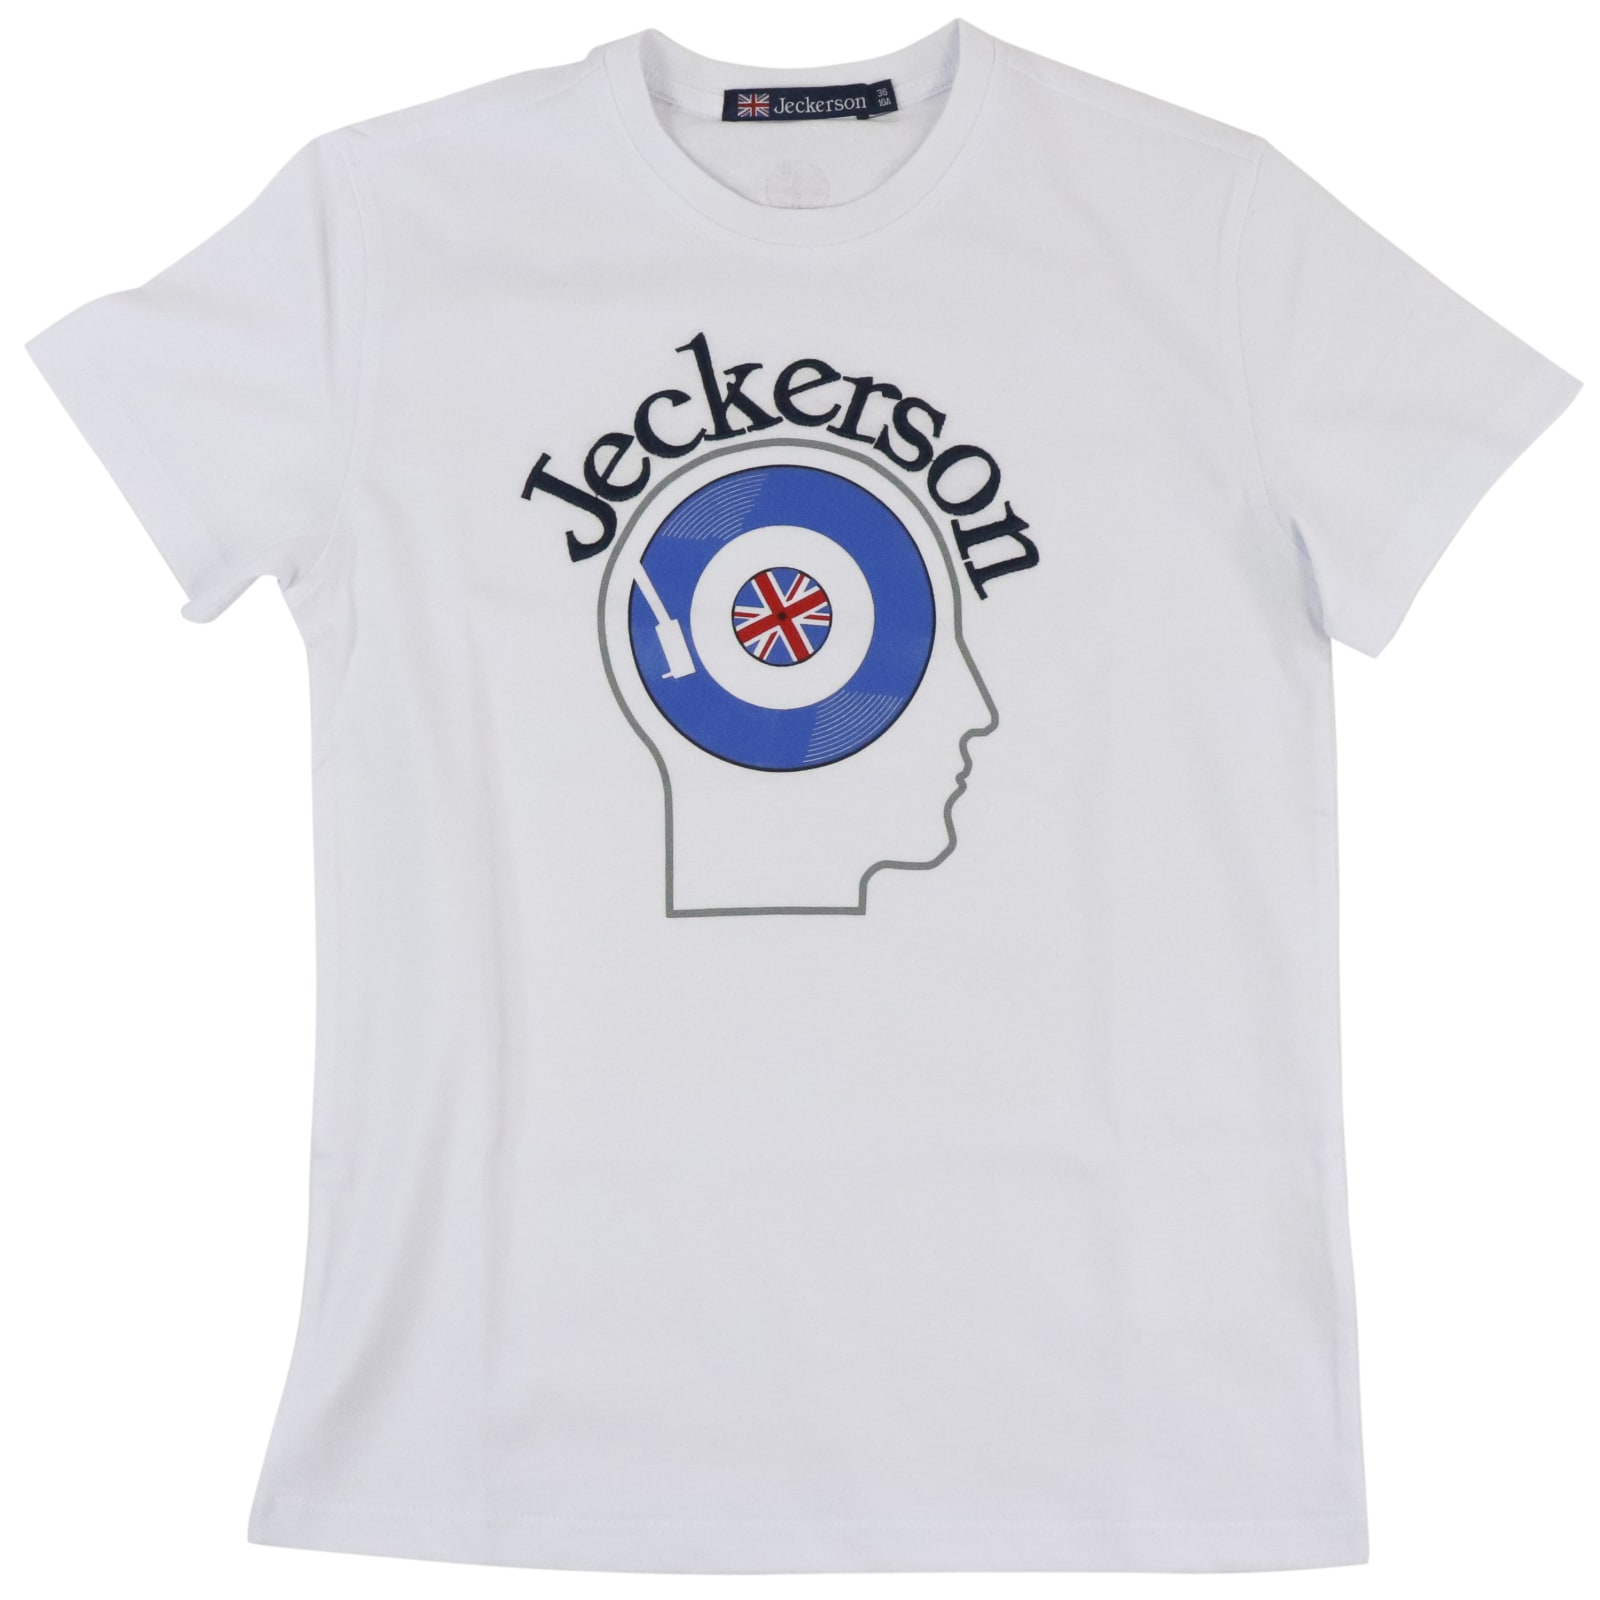 Jeckerson Kids' Cotton T-shirt In White